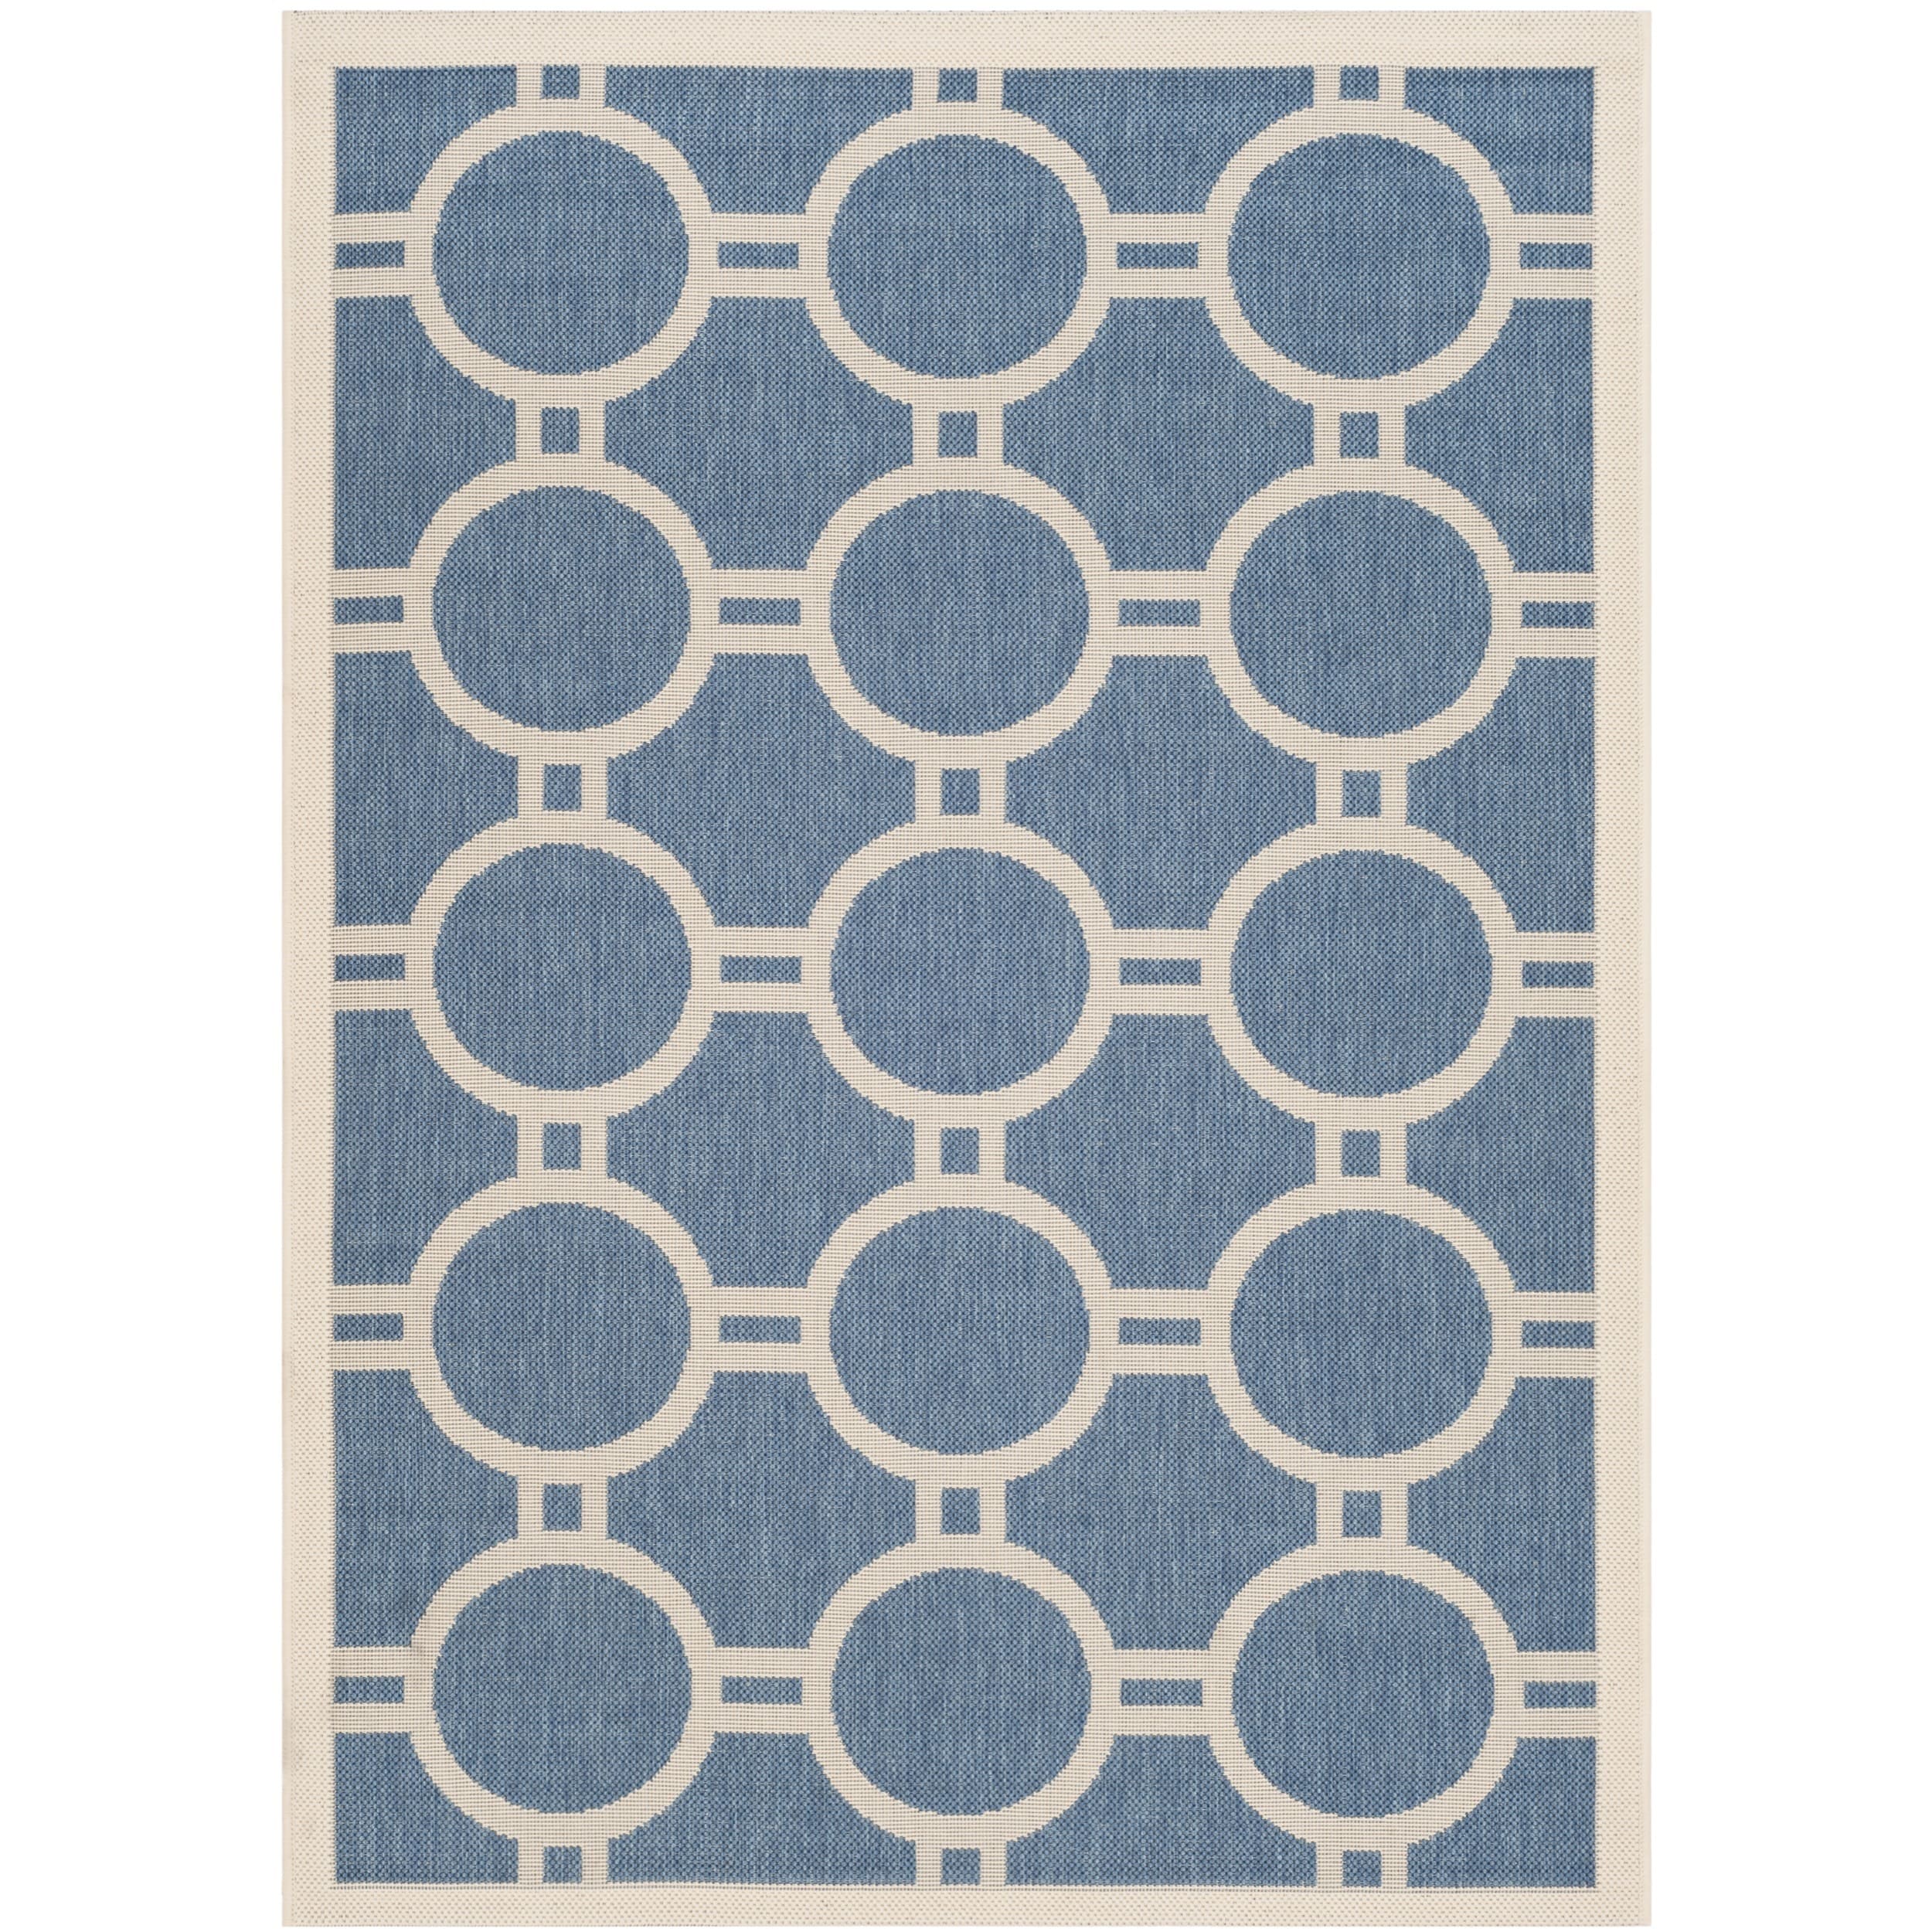 Safavieh Indoor/ Outdoor Courtyard Circles pattern Blue/ Beige Rug (8 X 11)